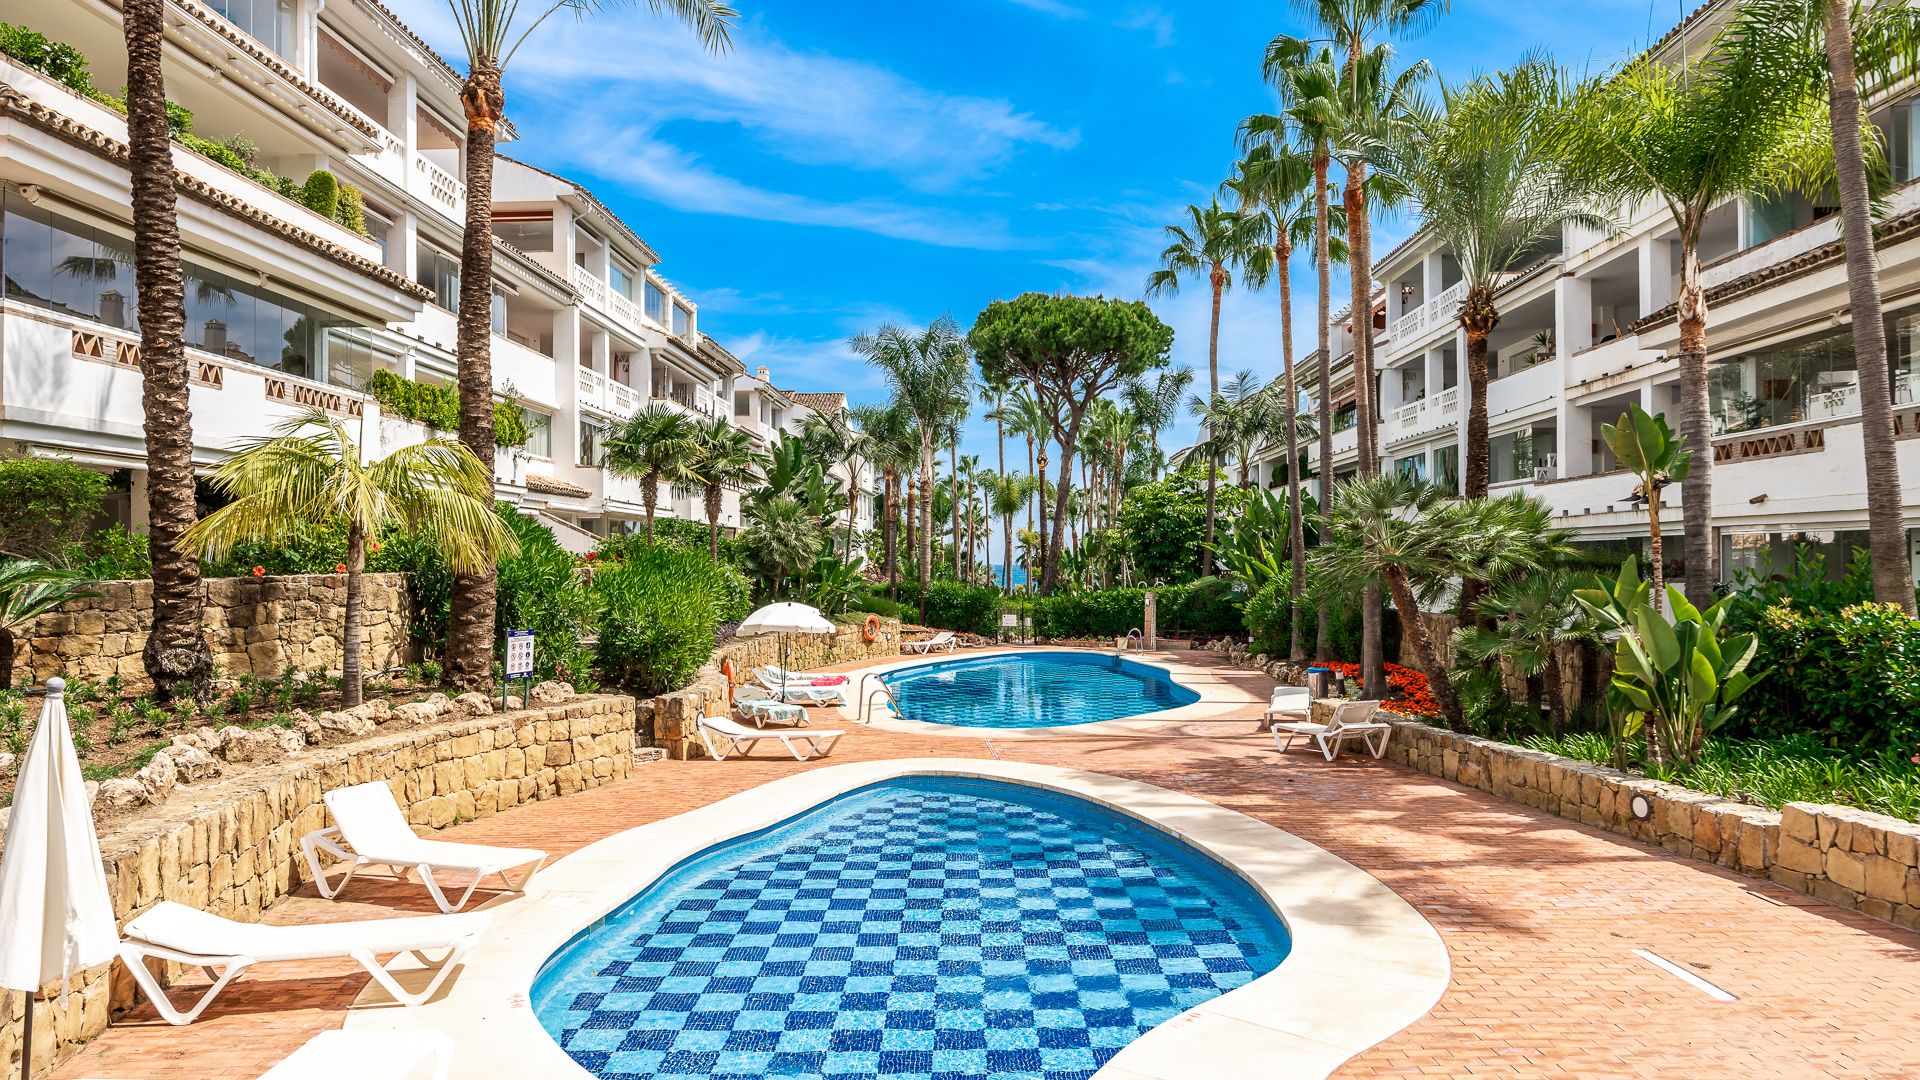 Apartment in Strandlage an der Goldenen Meile | Engel & Völkers Marbella